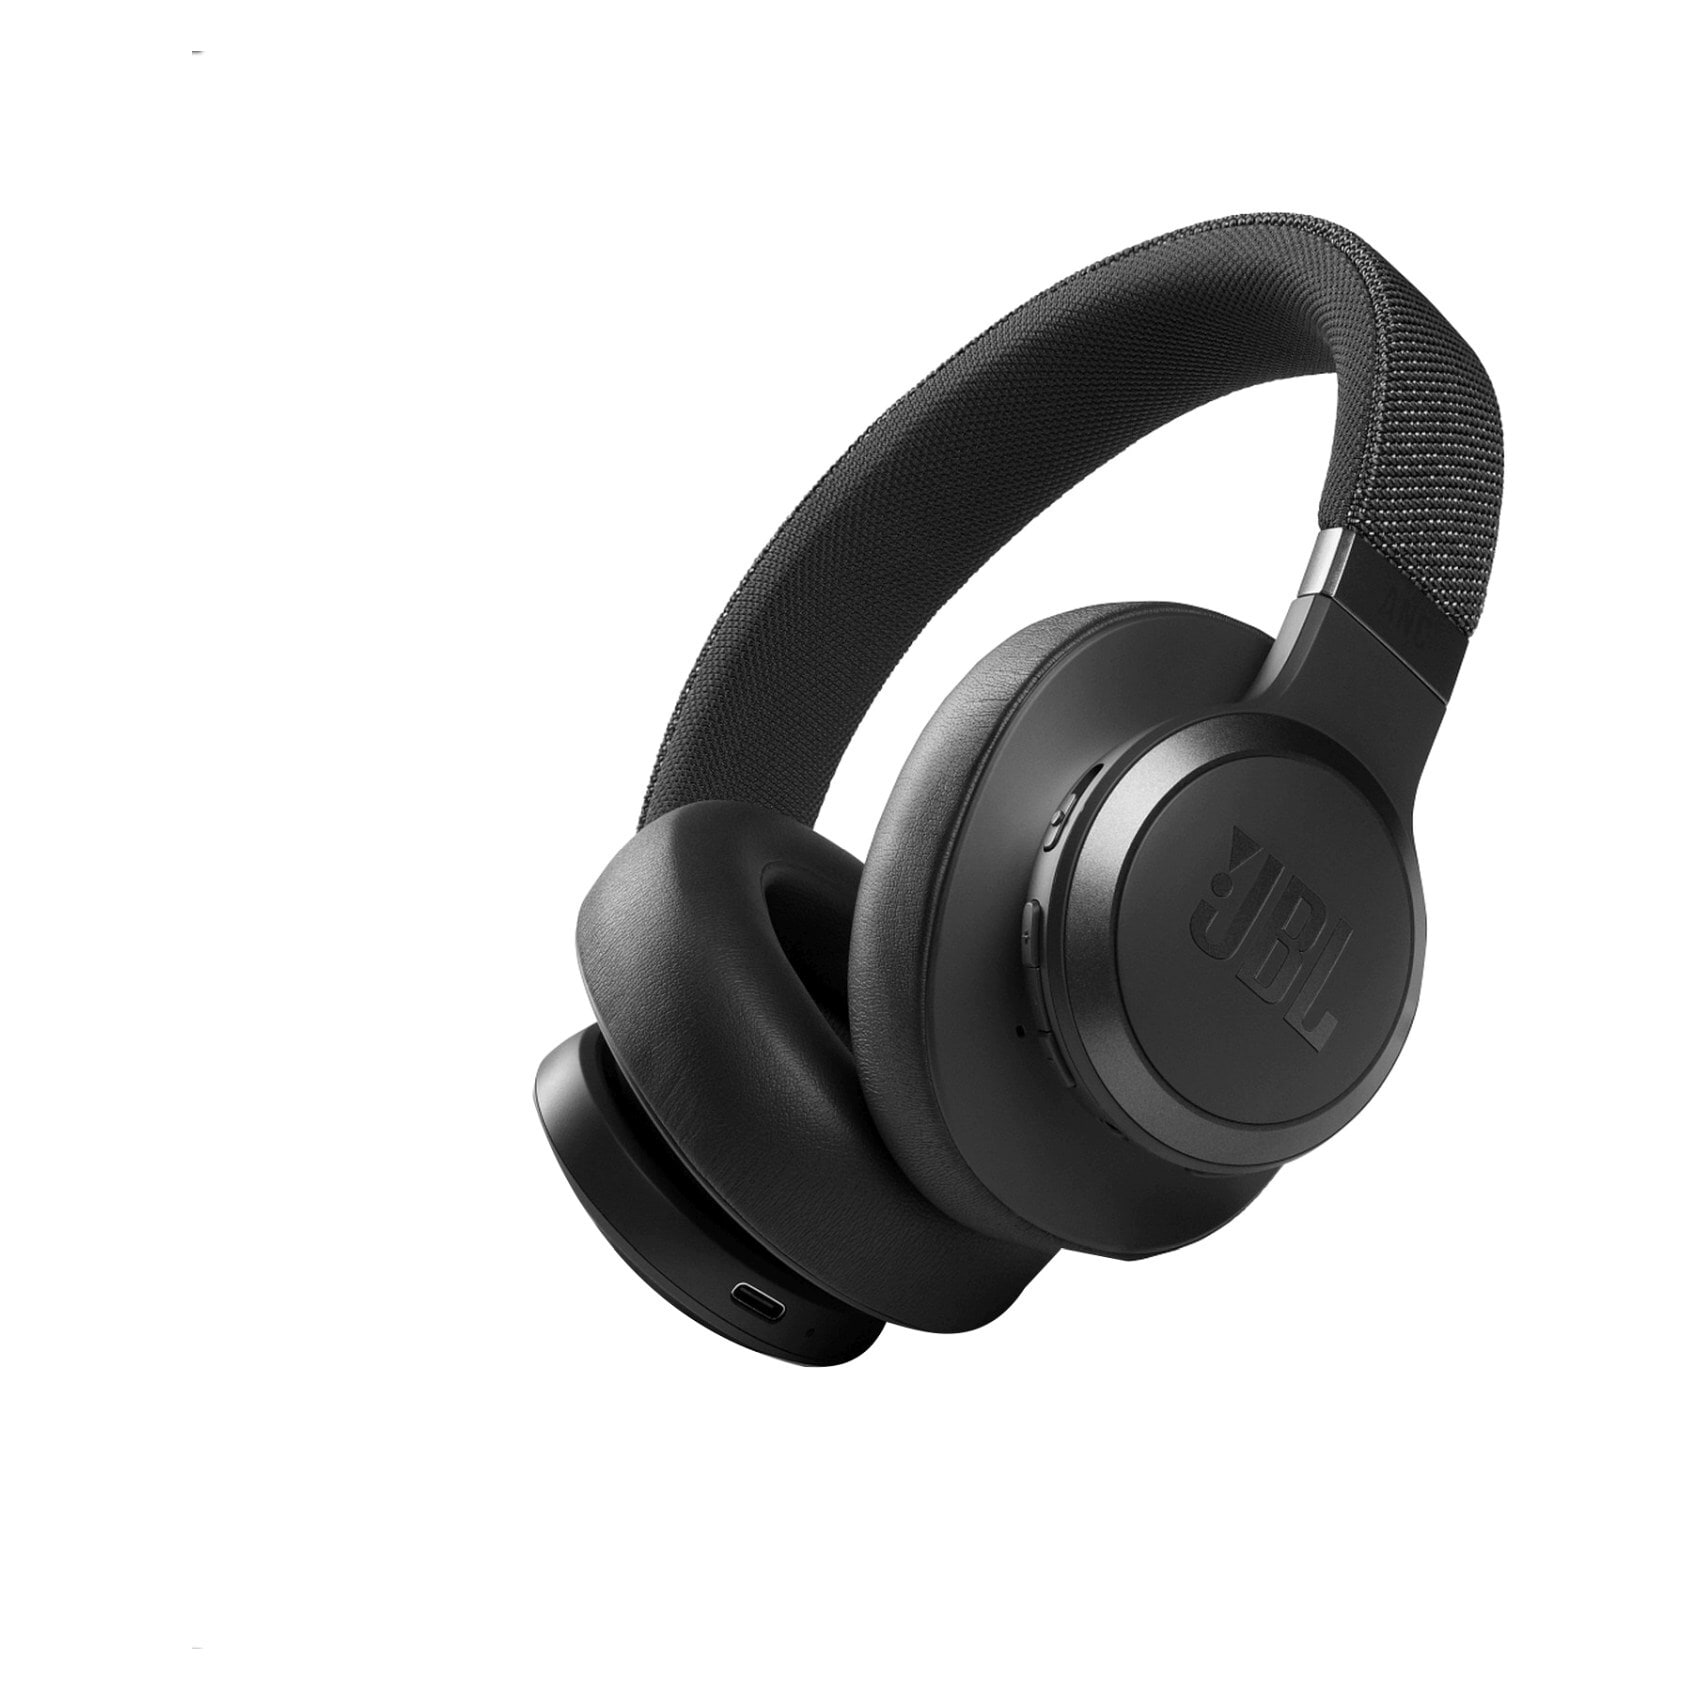 Buy JBL Live 660NC Wireless Over Ear Noise Headphones Black Online - Shop Smartphones, Tablets & Wearables on Carrefour UAE